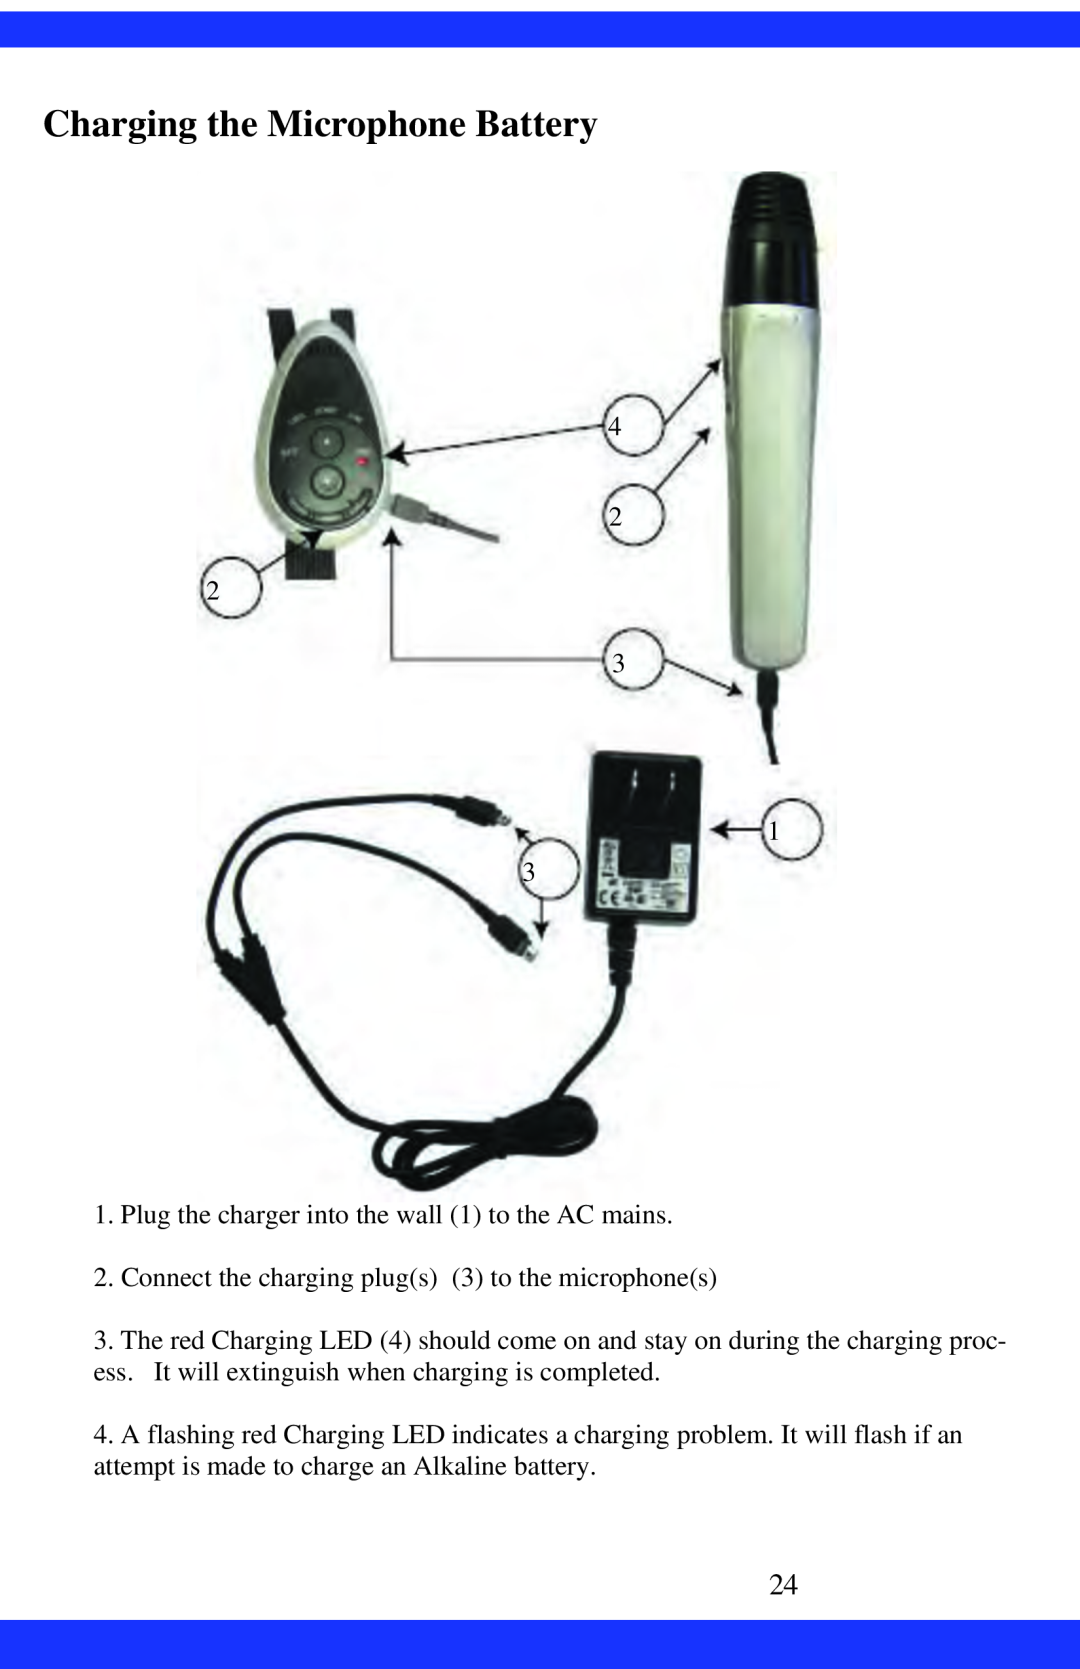 Dukane CAE-20W Charging the Microphone Battery, 4 2 2 3 1 3, Connect the charging plugs 3 to the microphones 